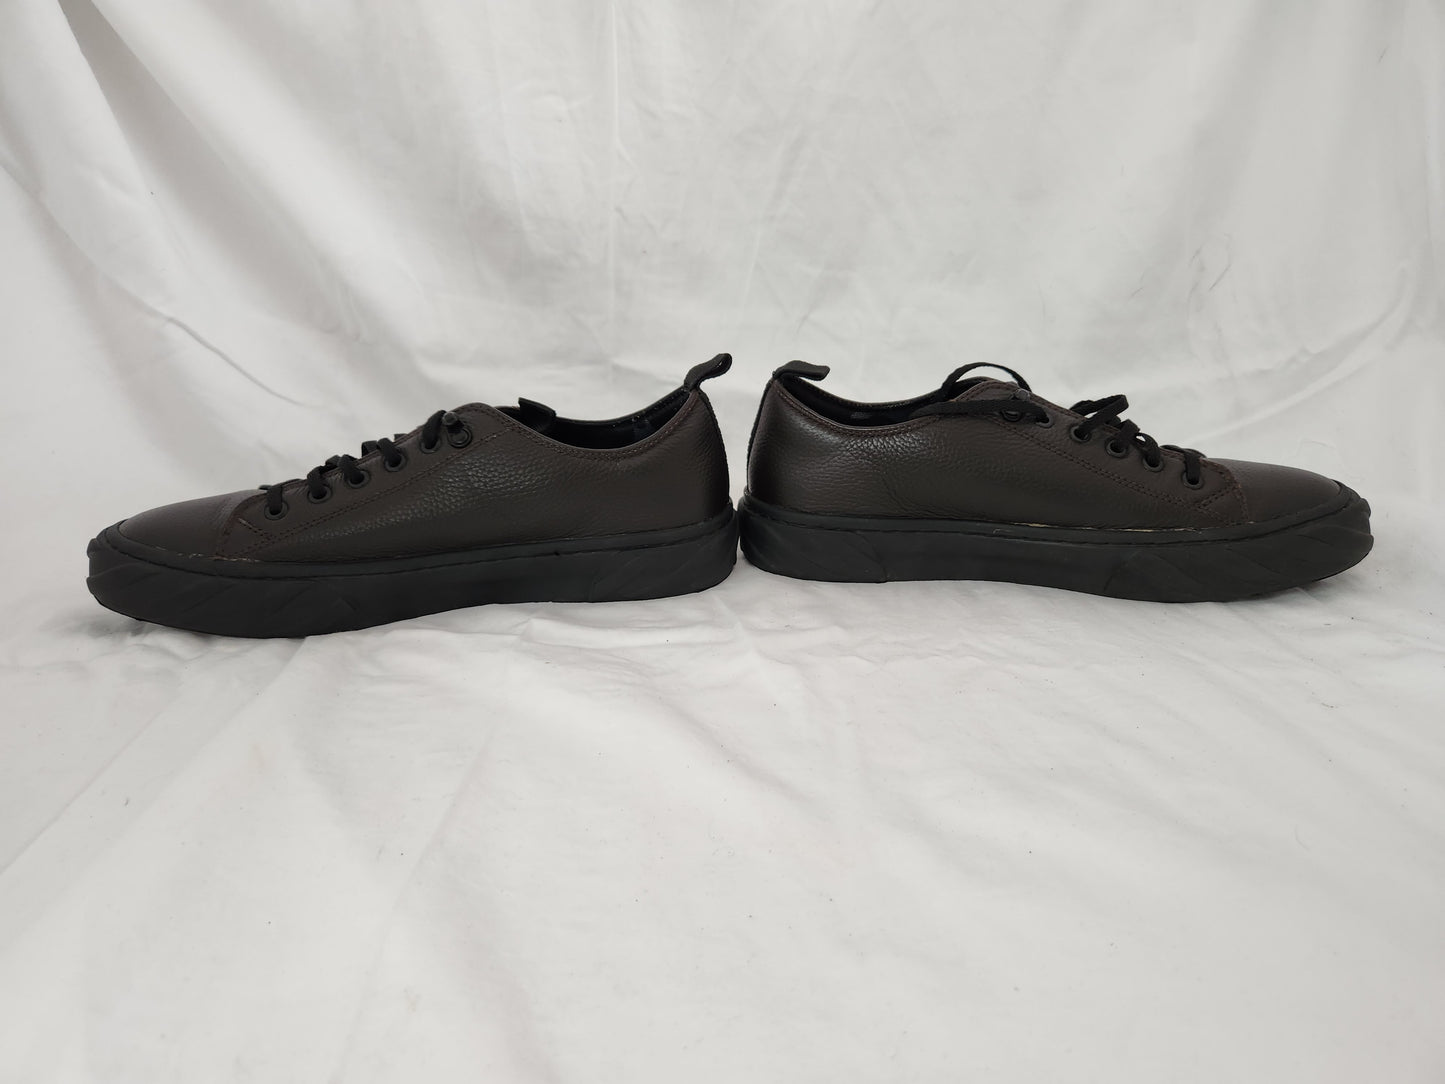 NWOB - KARL LAGERFELD PARIS brown Leather Low-Top Sneakers - Size: 10M